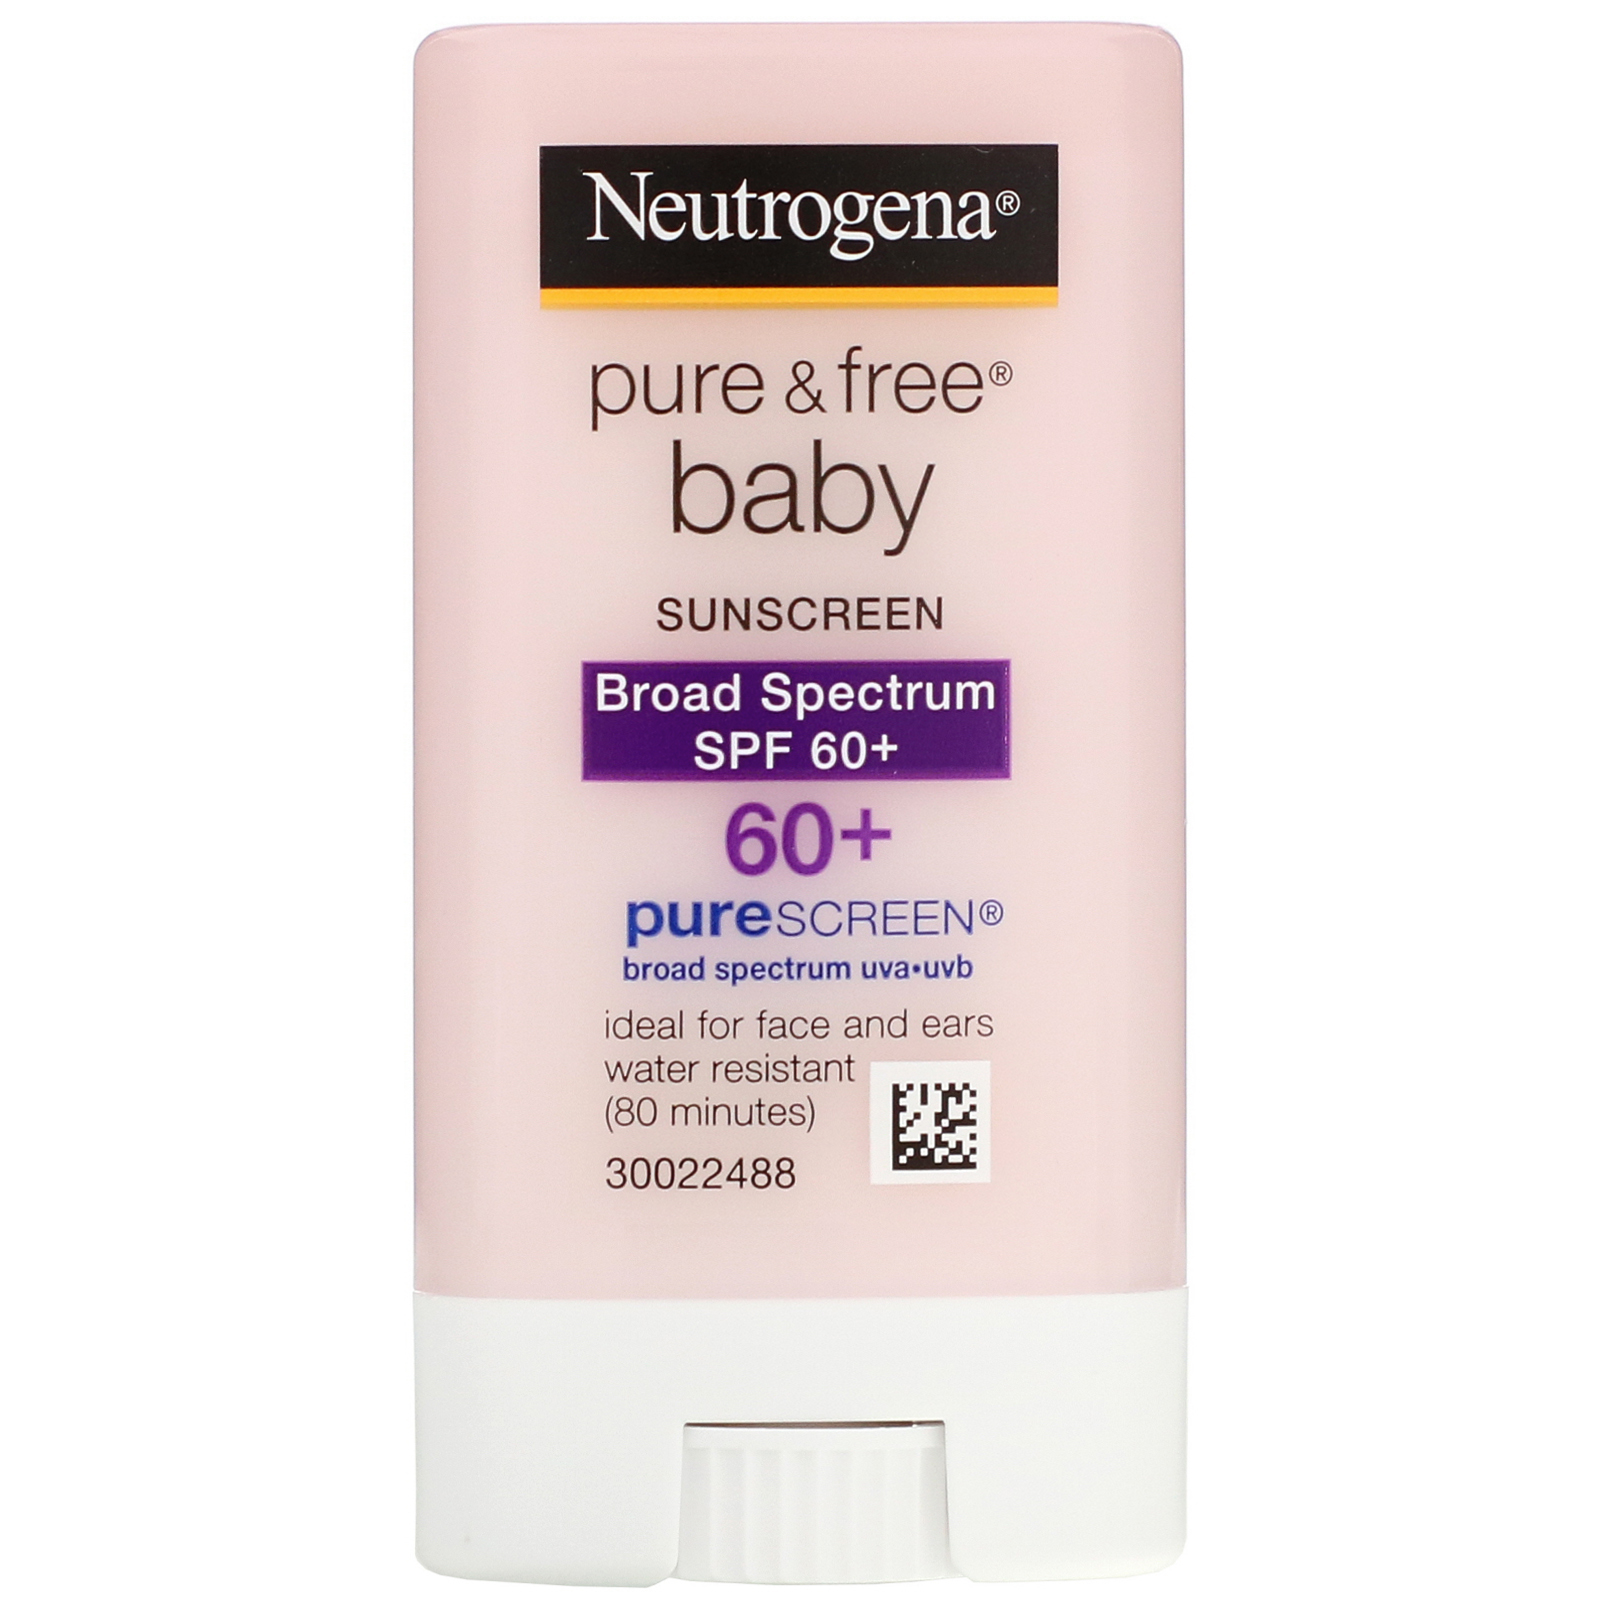 neutrogena pure & free baby sunscreen spf 50